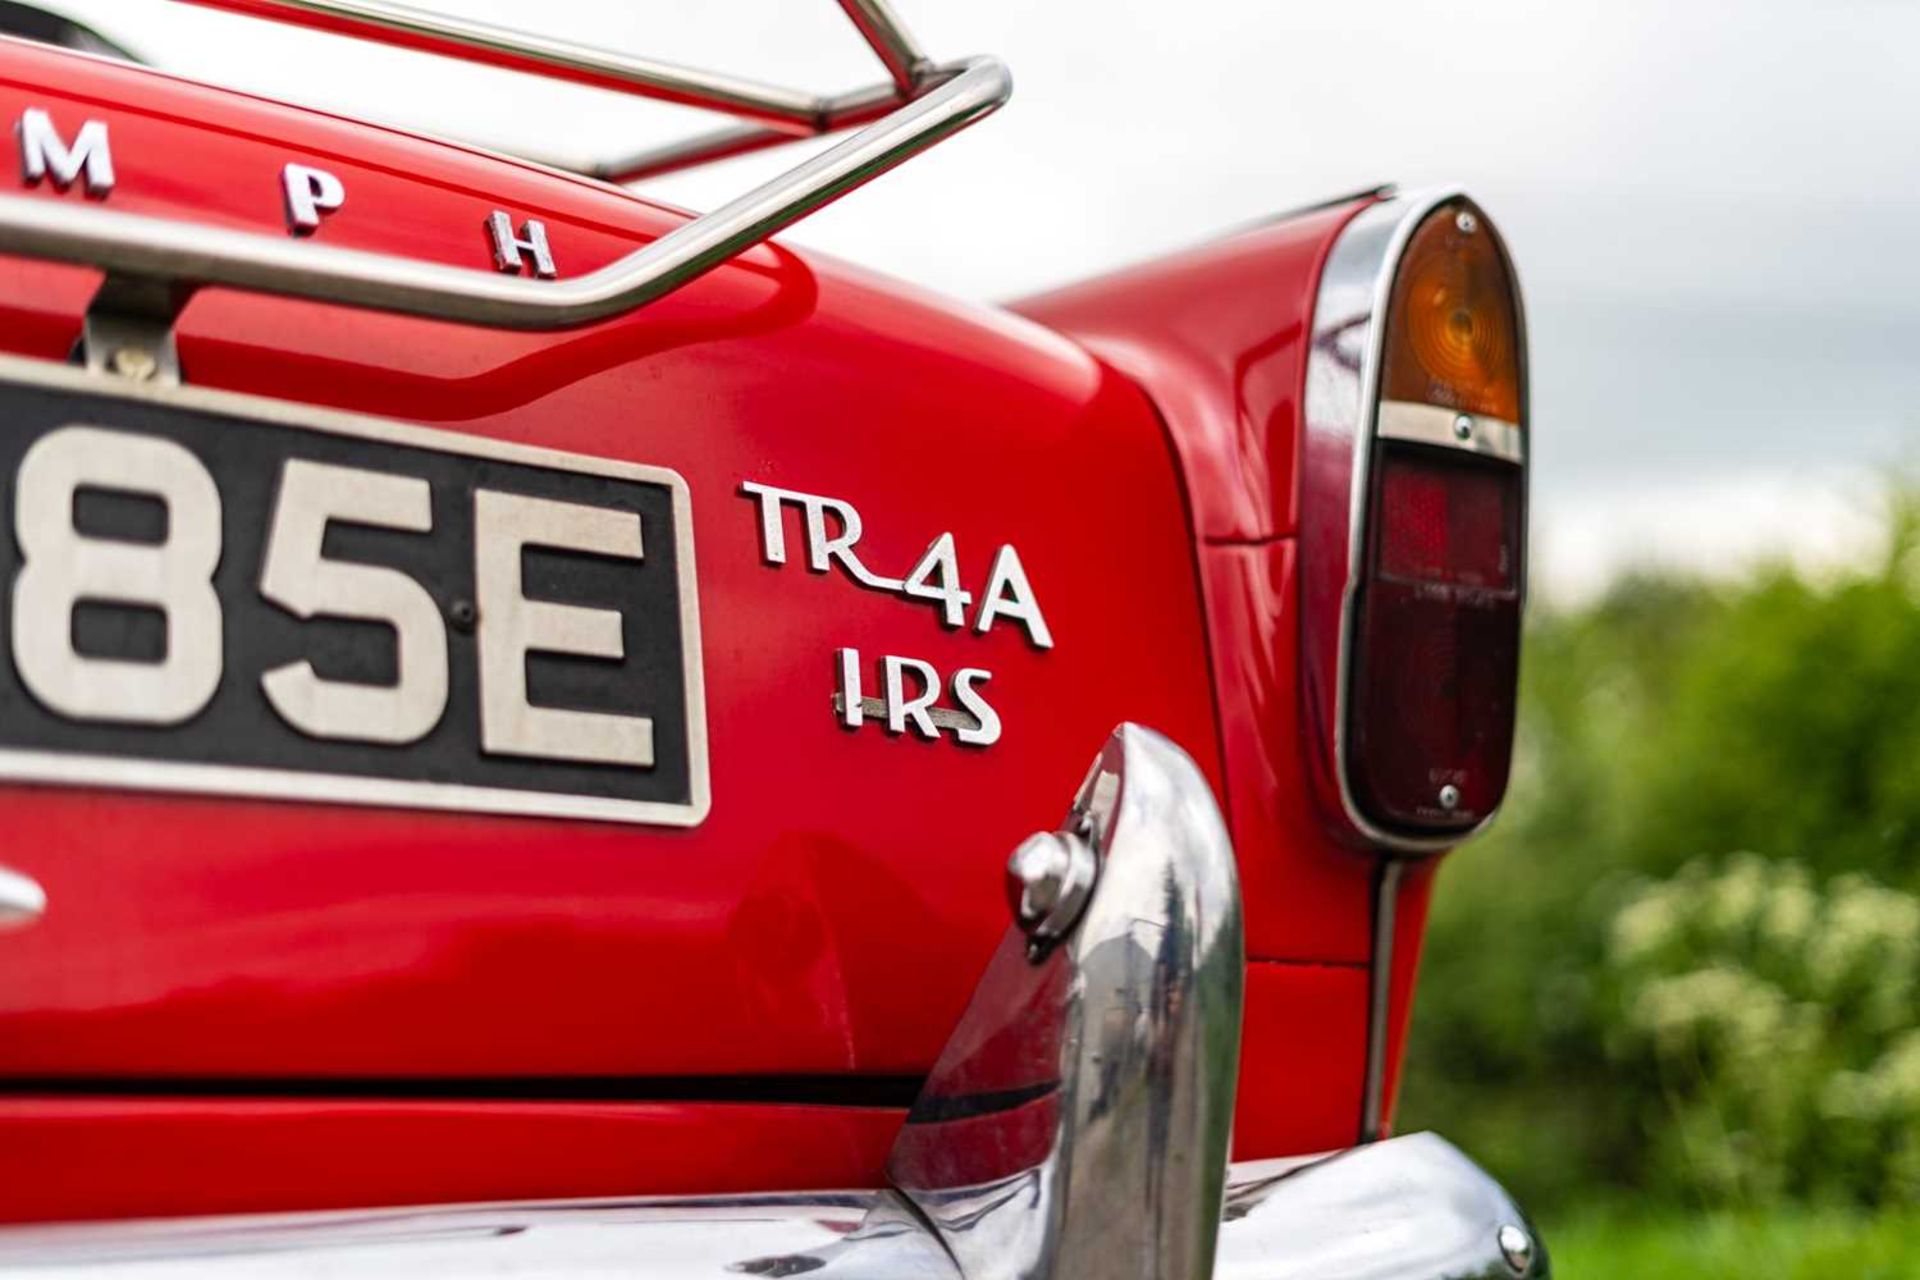 1967 Triumph TR4A IRS - Image 15 of 53